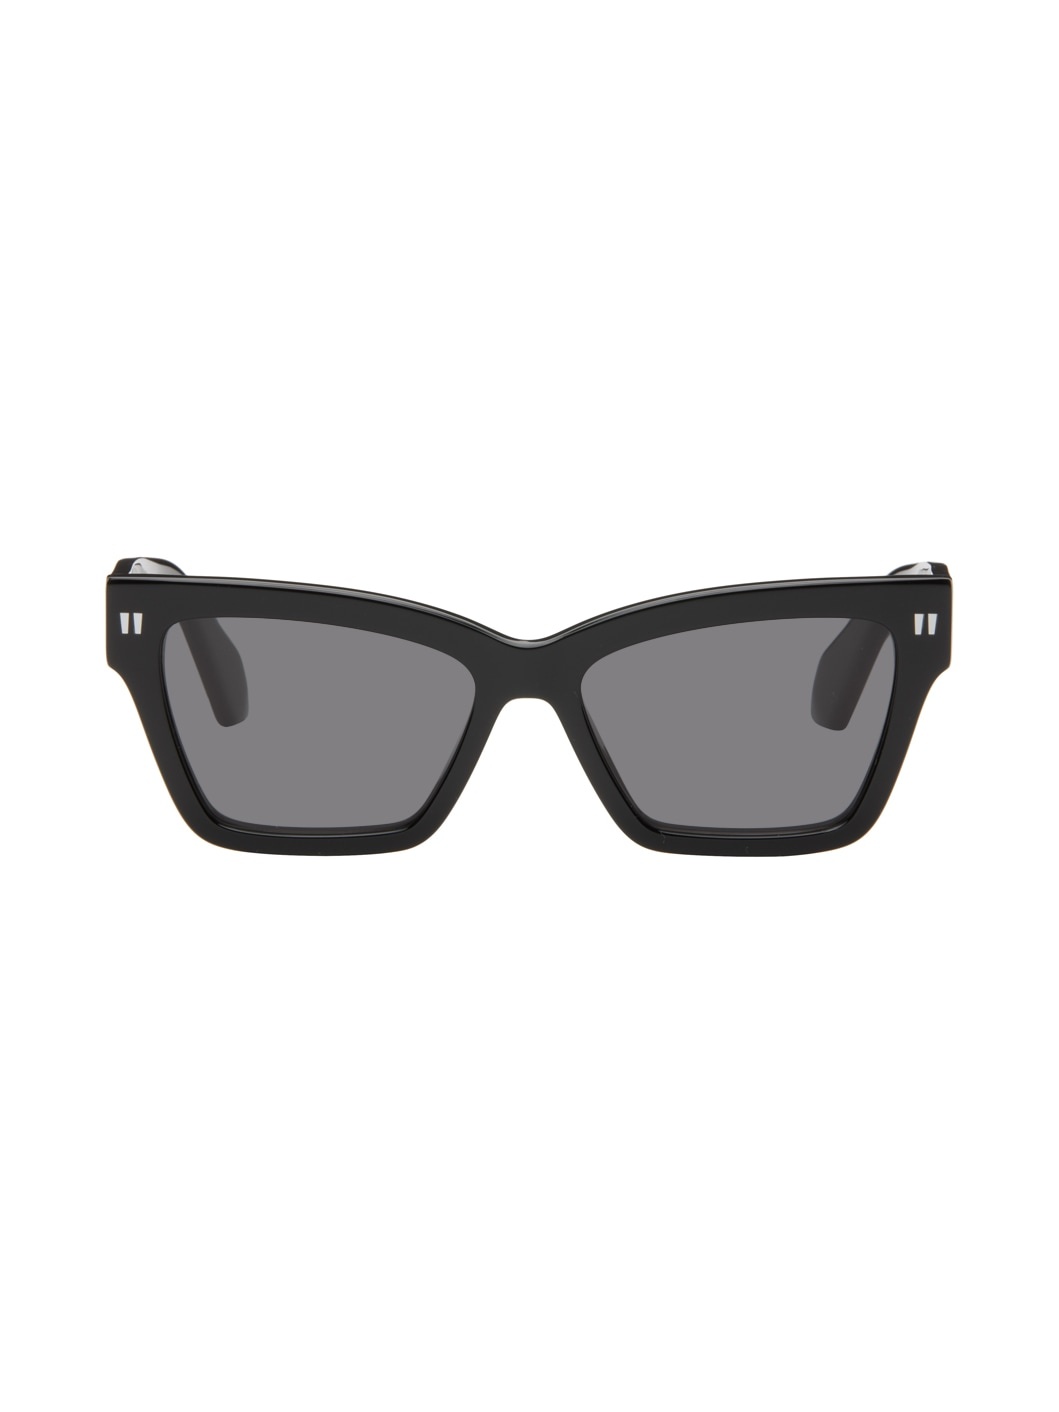 Black Cincinnati Sunglasses - 1